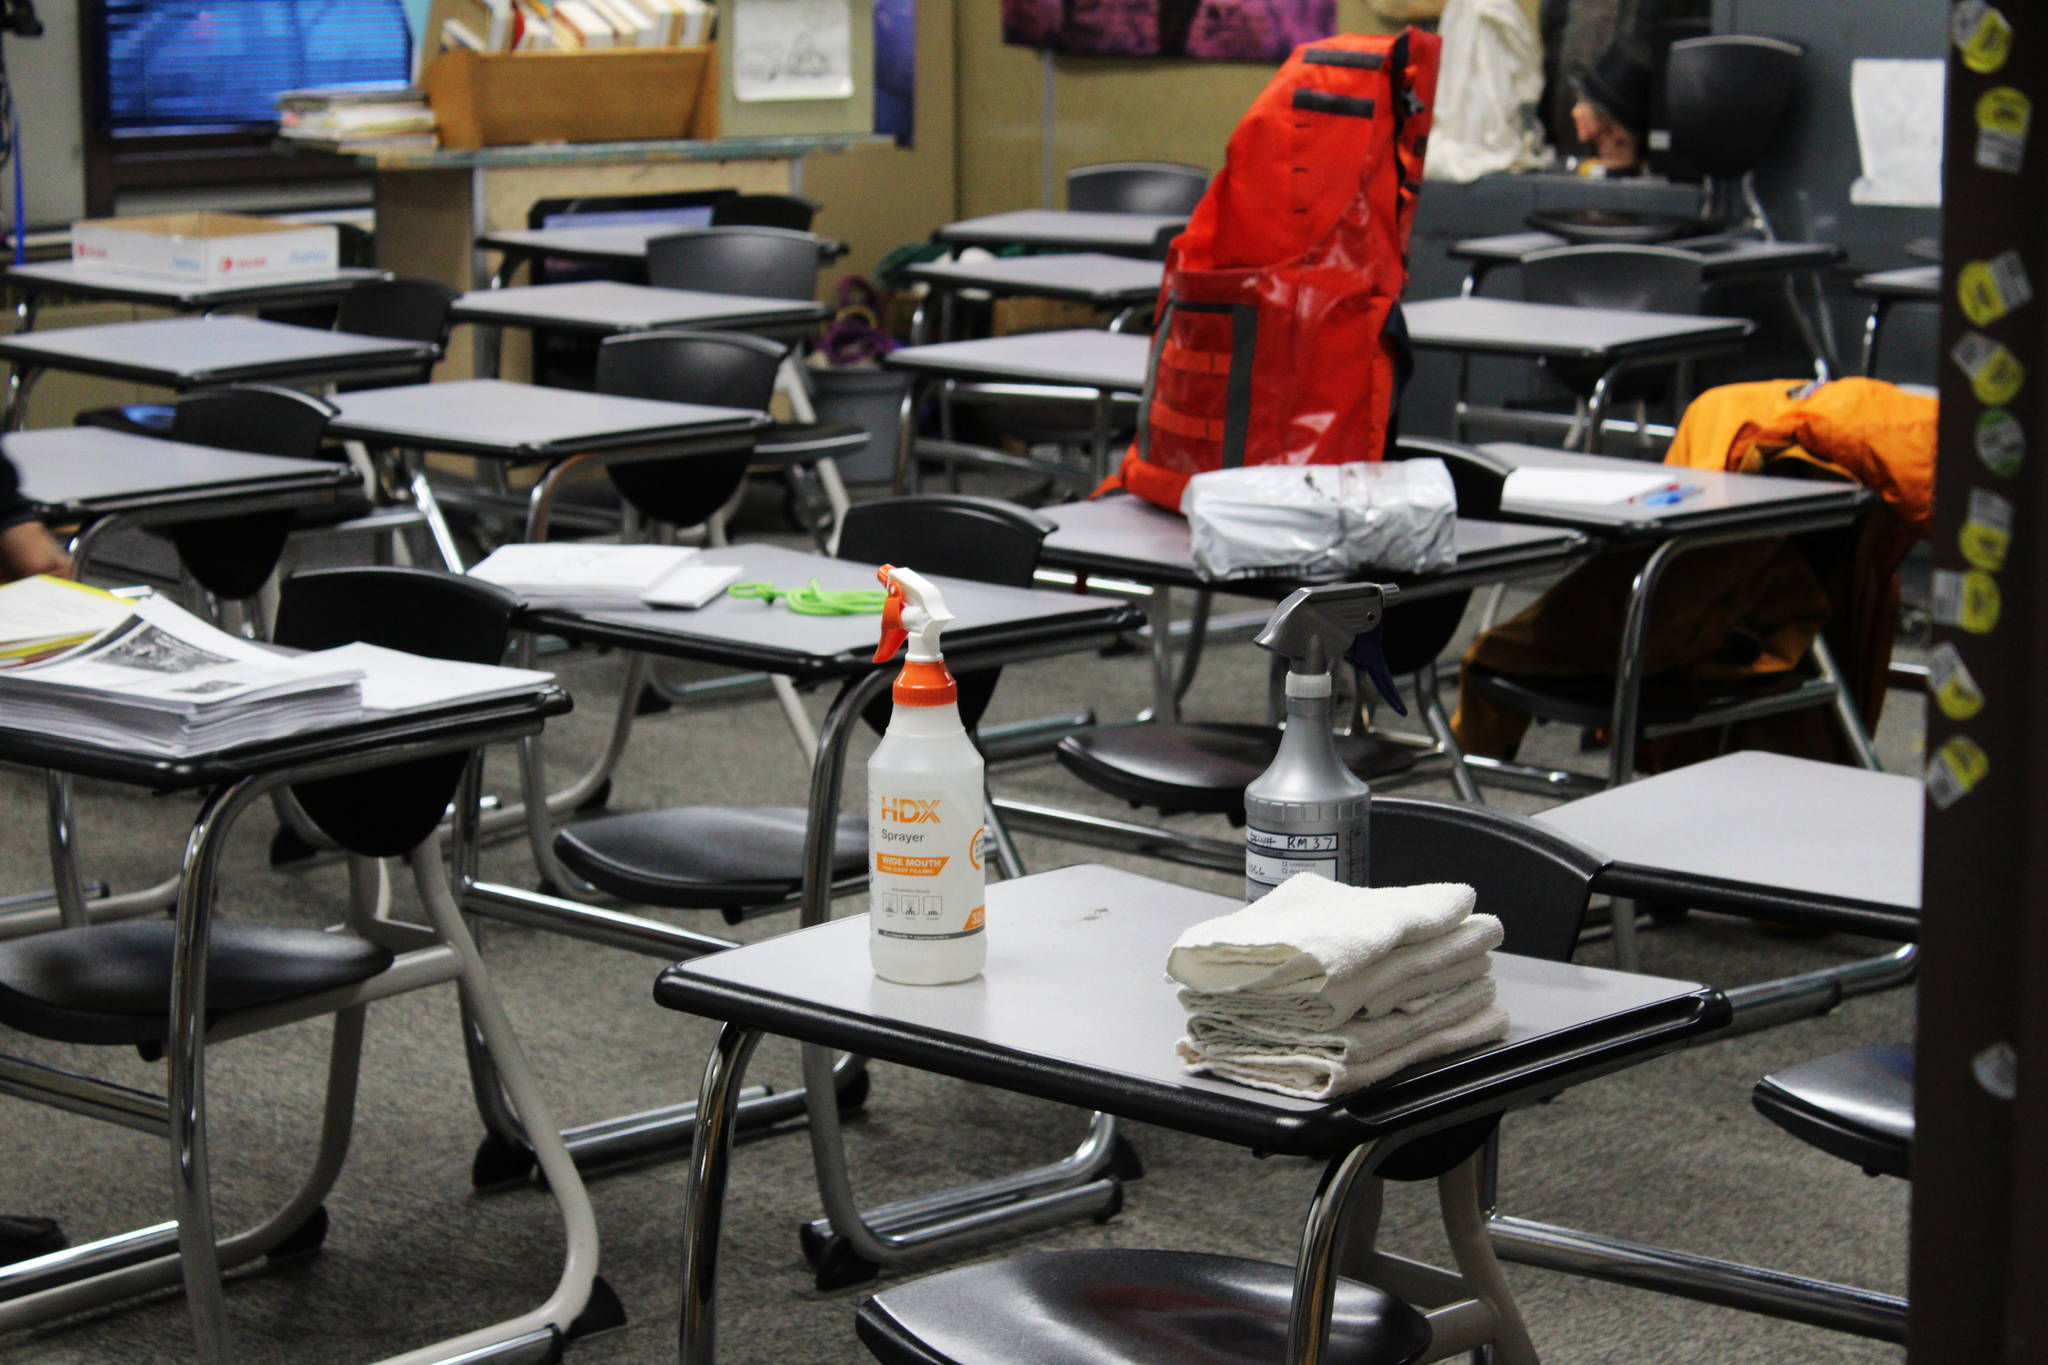 Sanitization equipment is seen inside of a classroom at Kenai Middle School on Friday, Jan. 8 in Kenai, Alaska. (Ashlyn O’Hara/Peninsula Clarion)